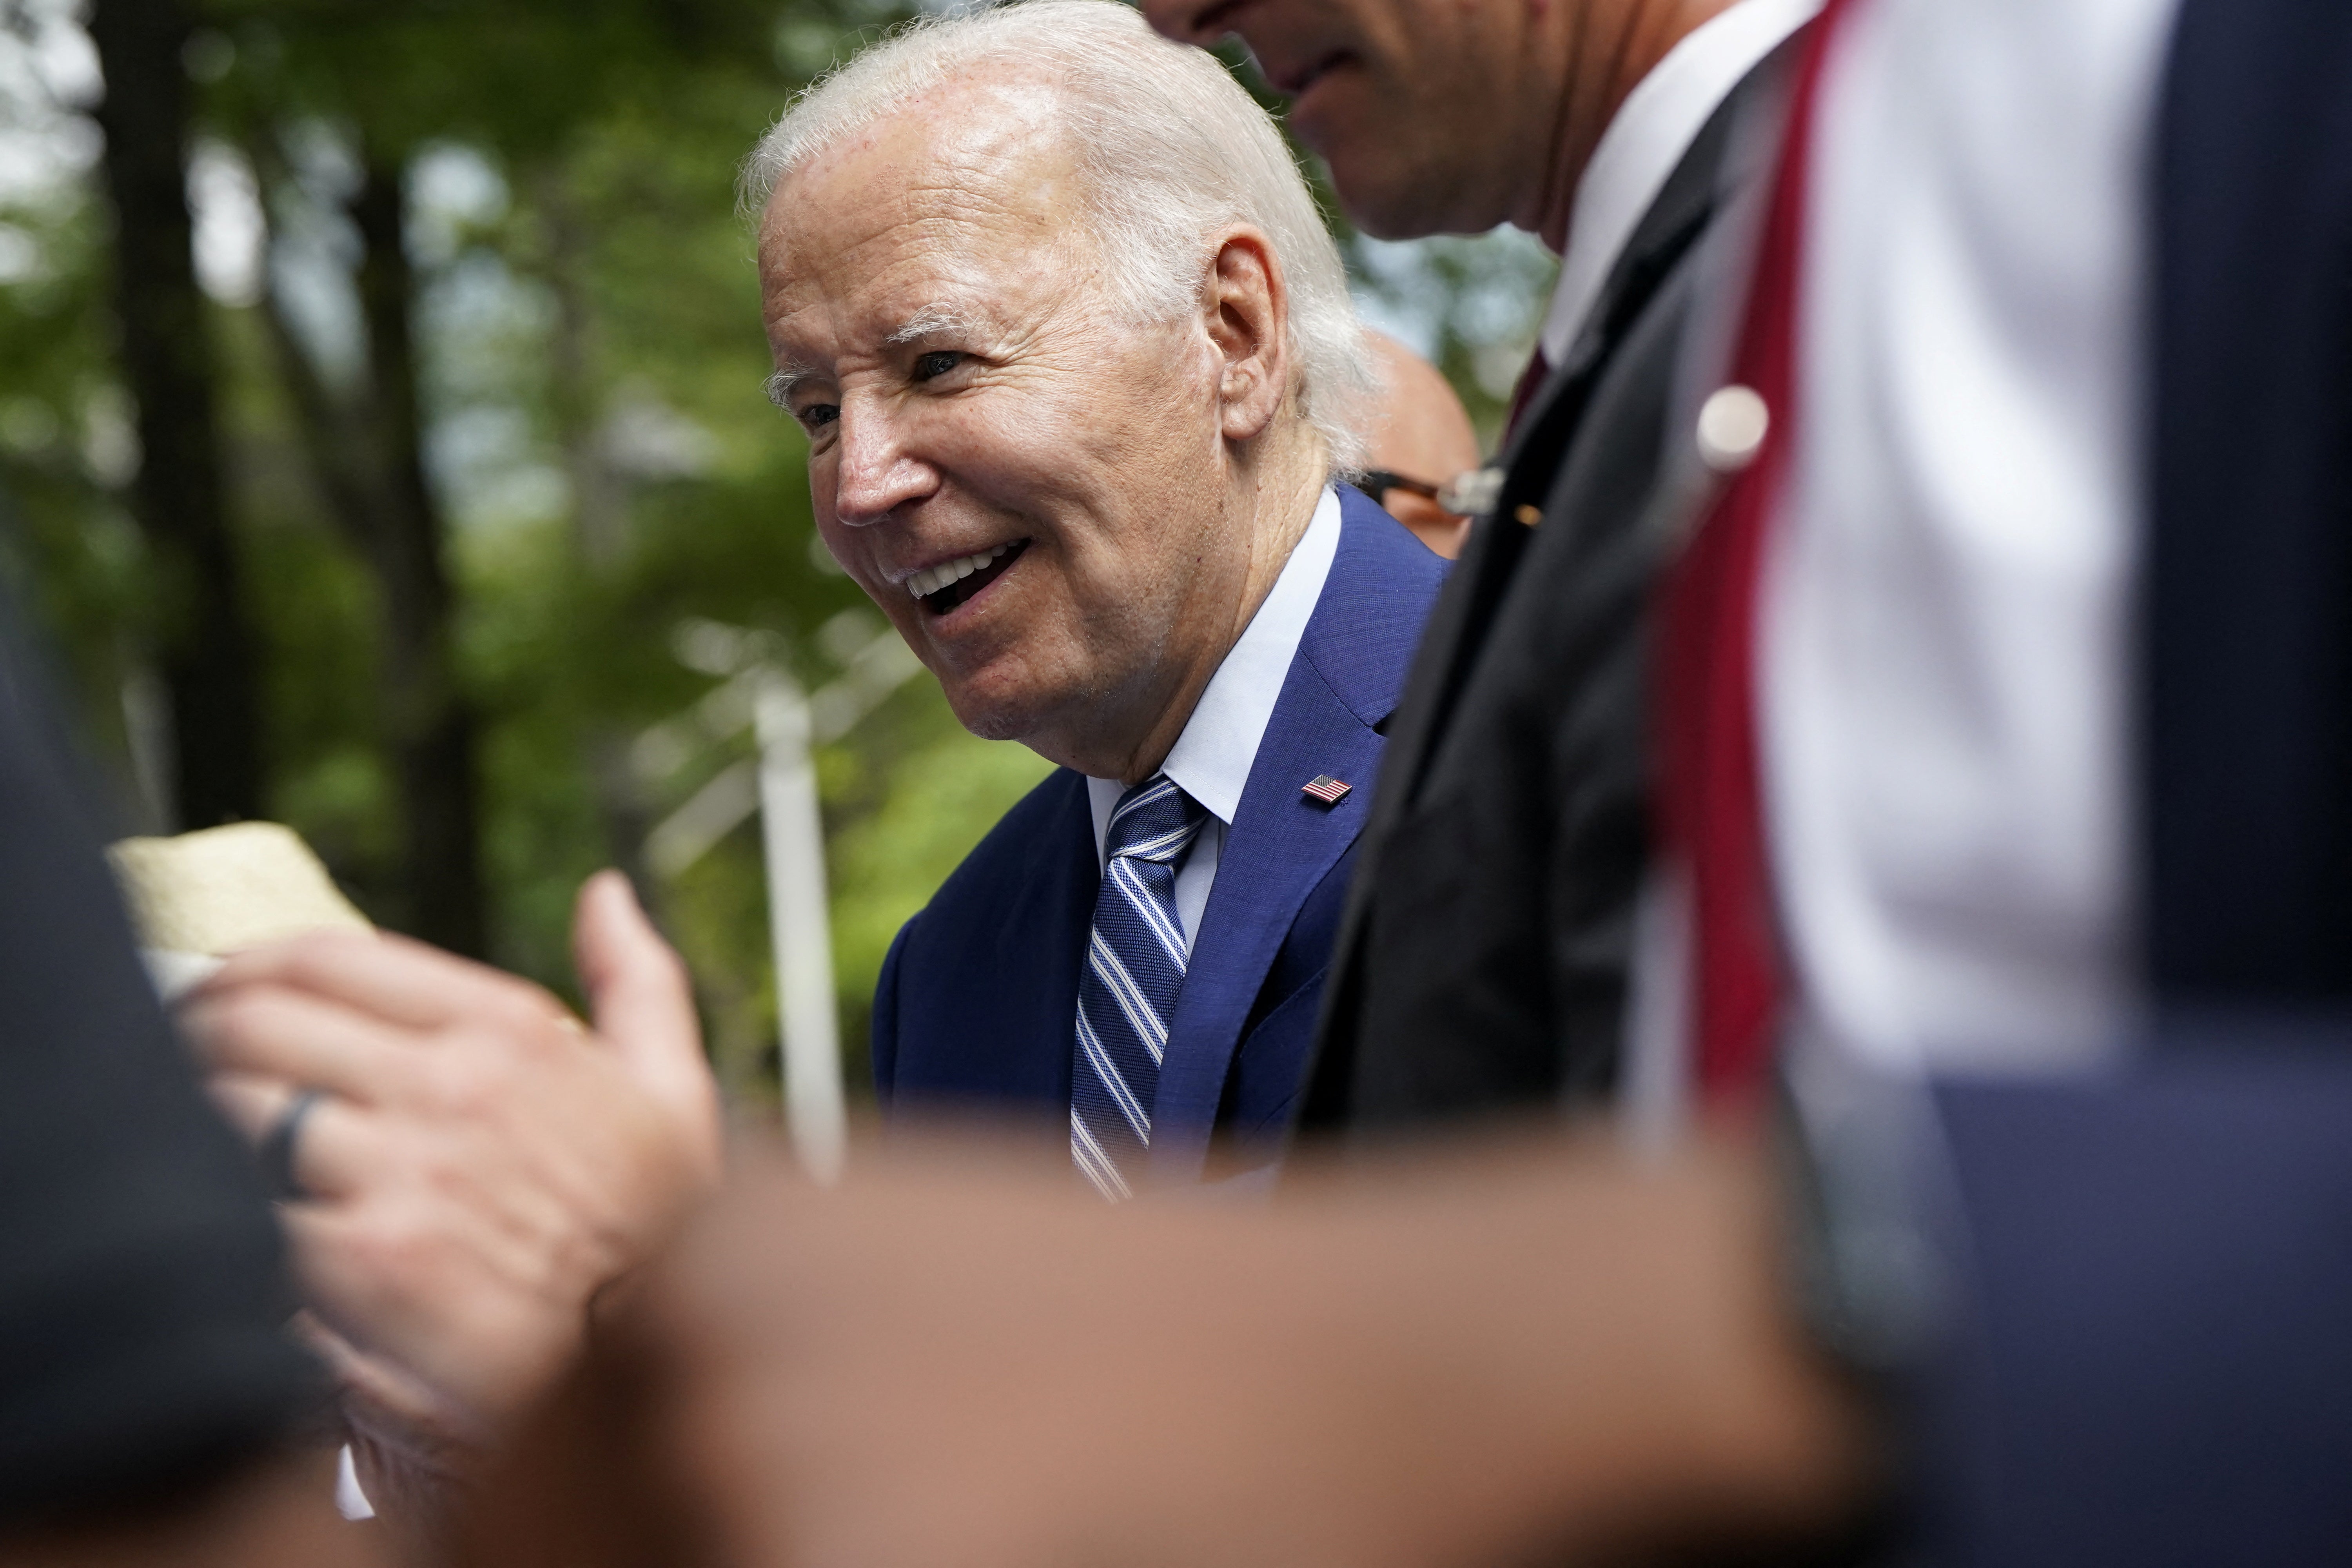 Joe Biden greets supporters ahead of a presidential debate, in Atlanta